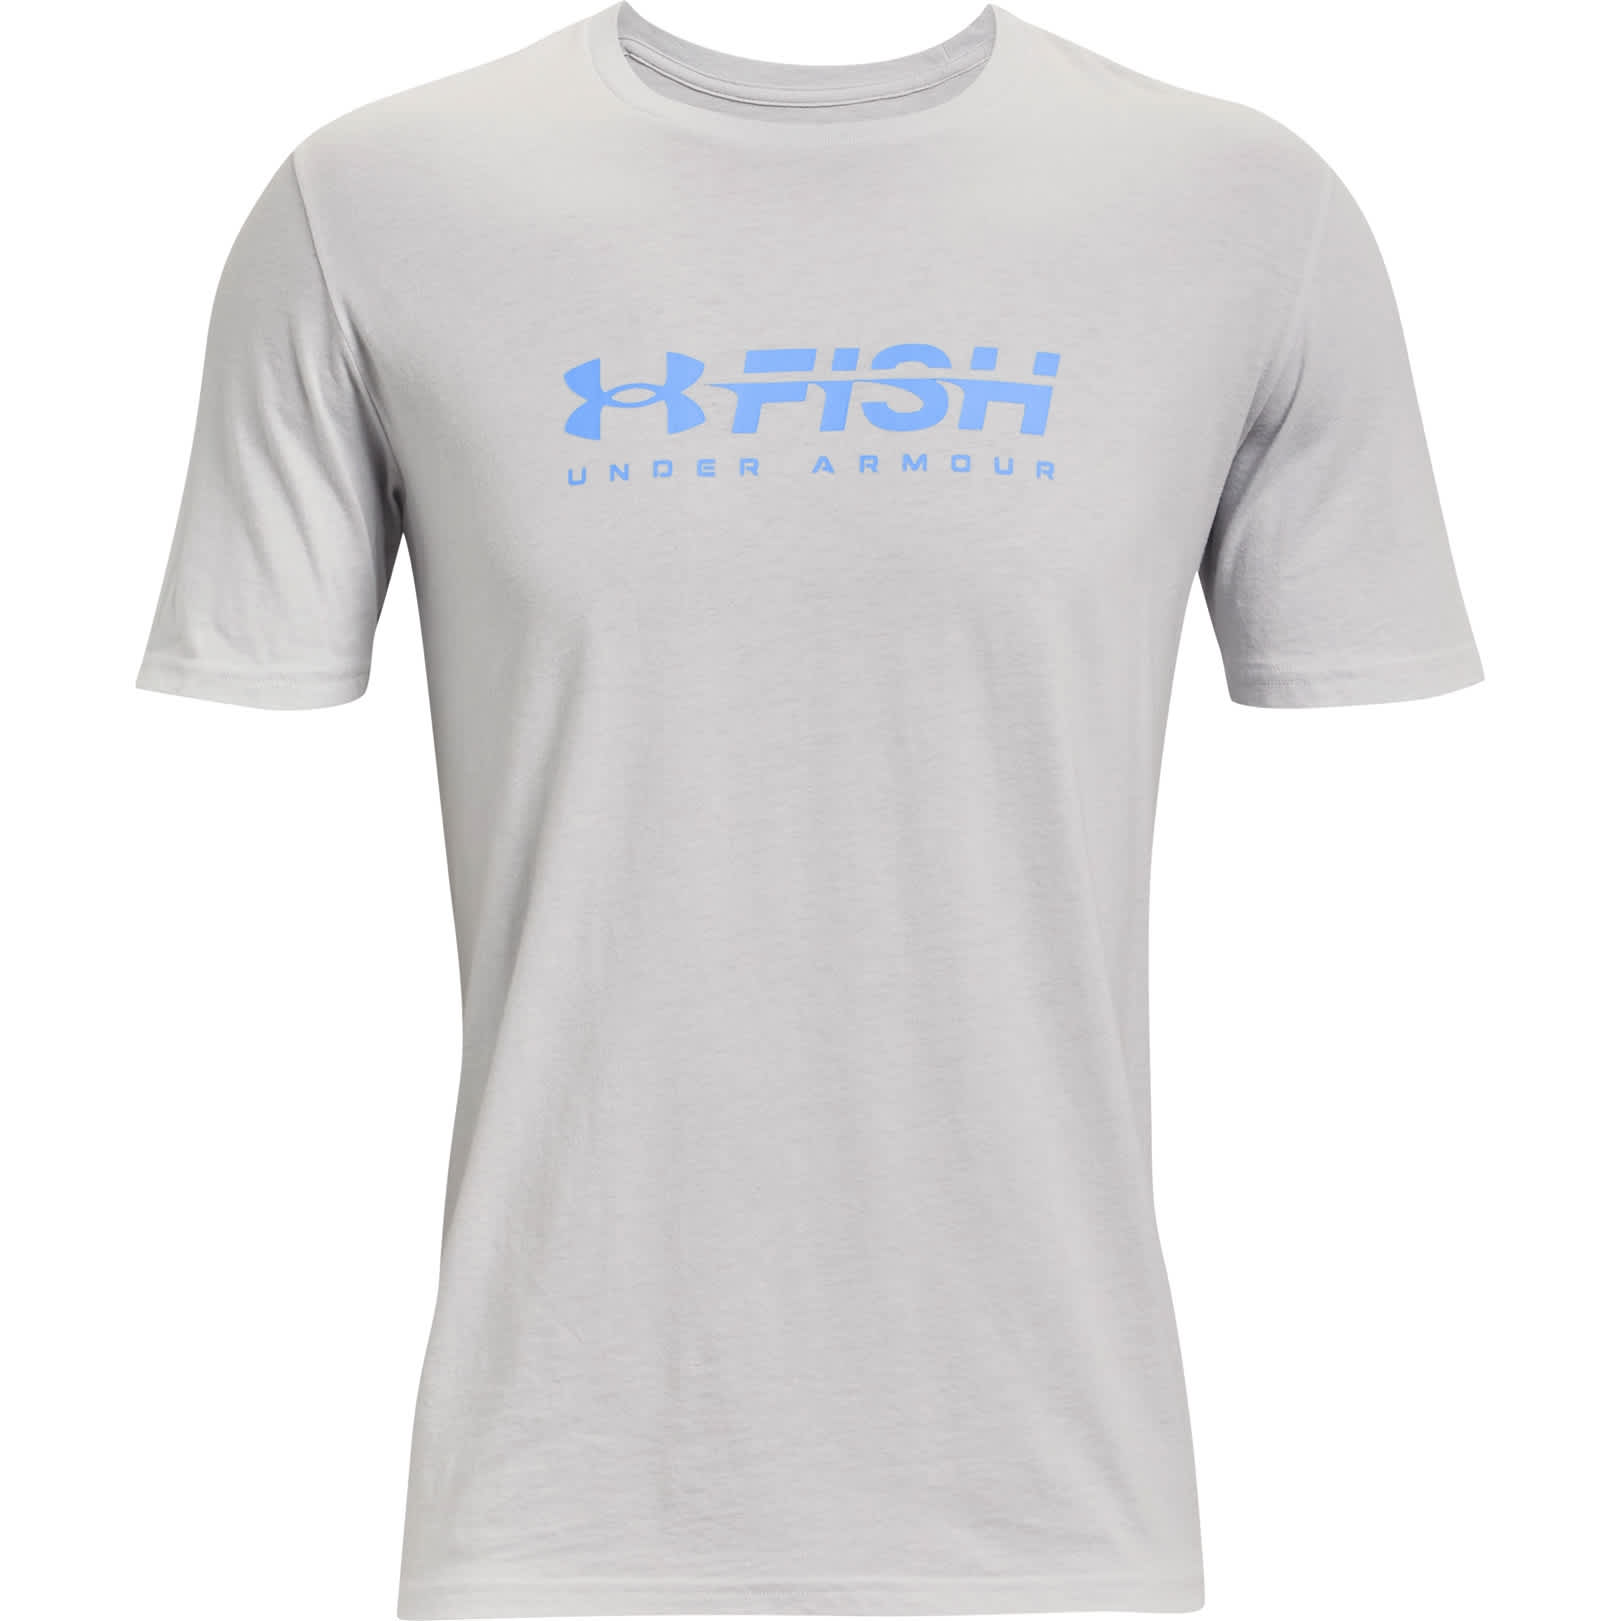 Under Armour® Men’s UA® Fish Strike Short-Sleeve T-Shirt